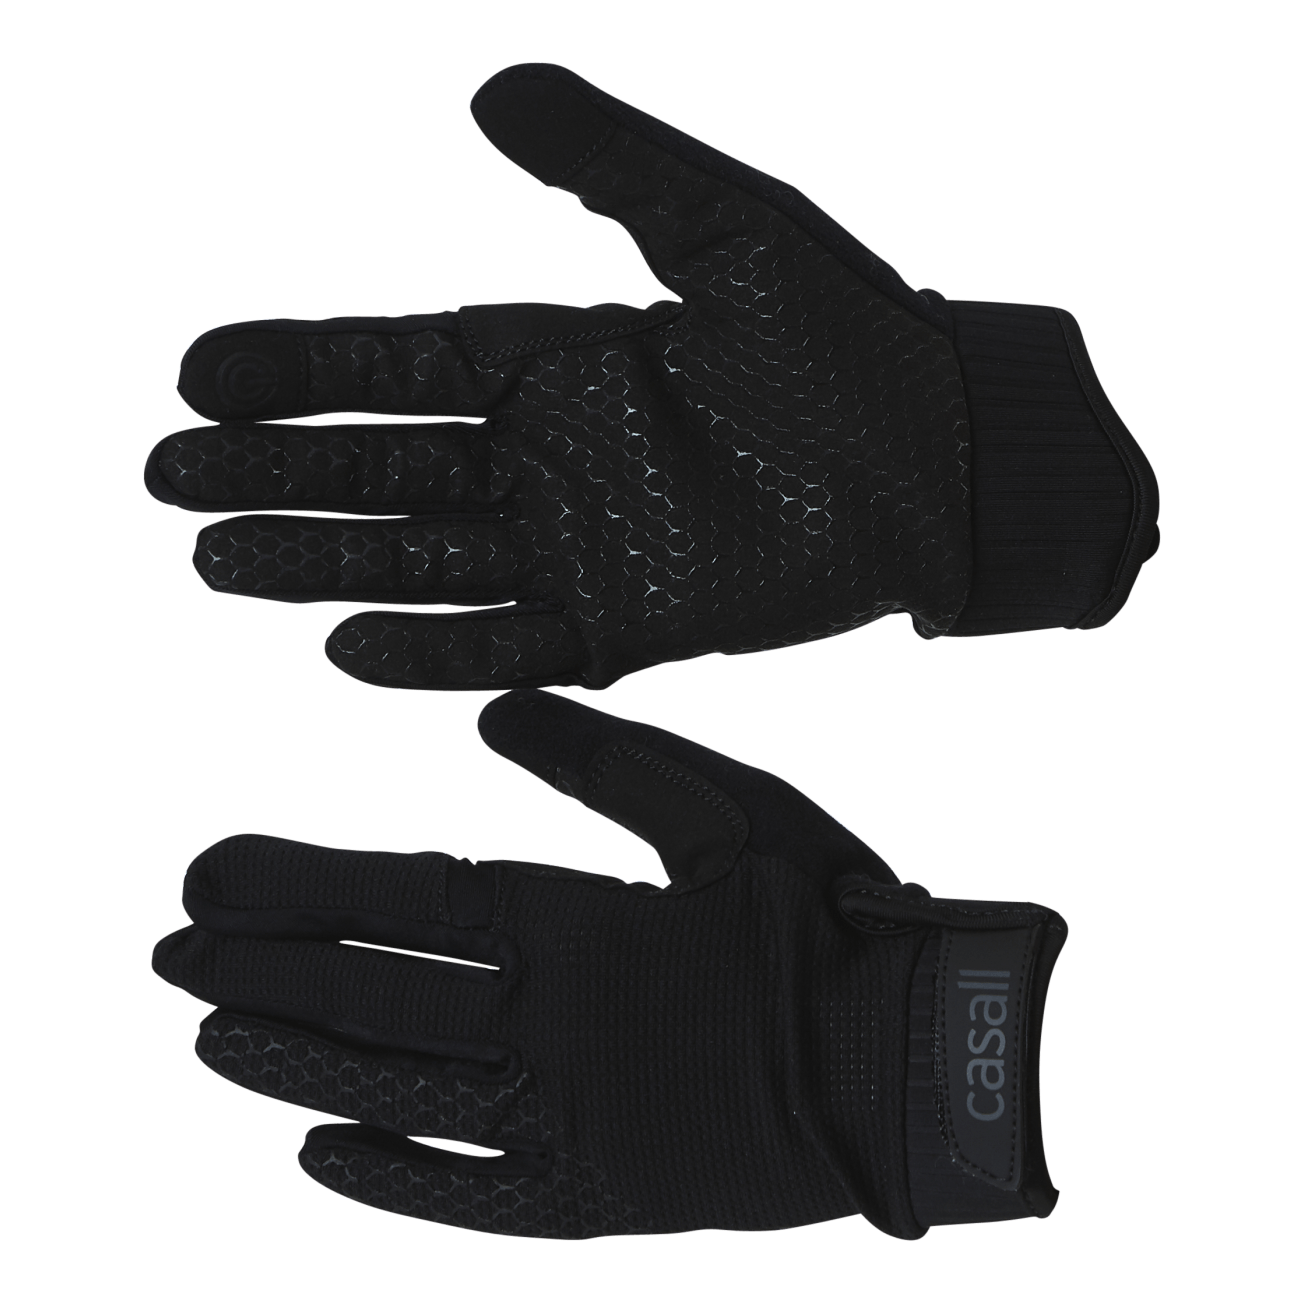 Antage Kunstneriske Fem Casall Exercise glove Long finger Black | Runforest.com